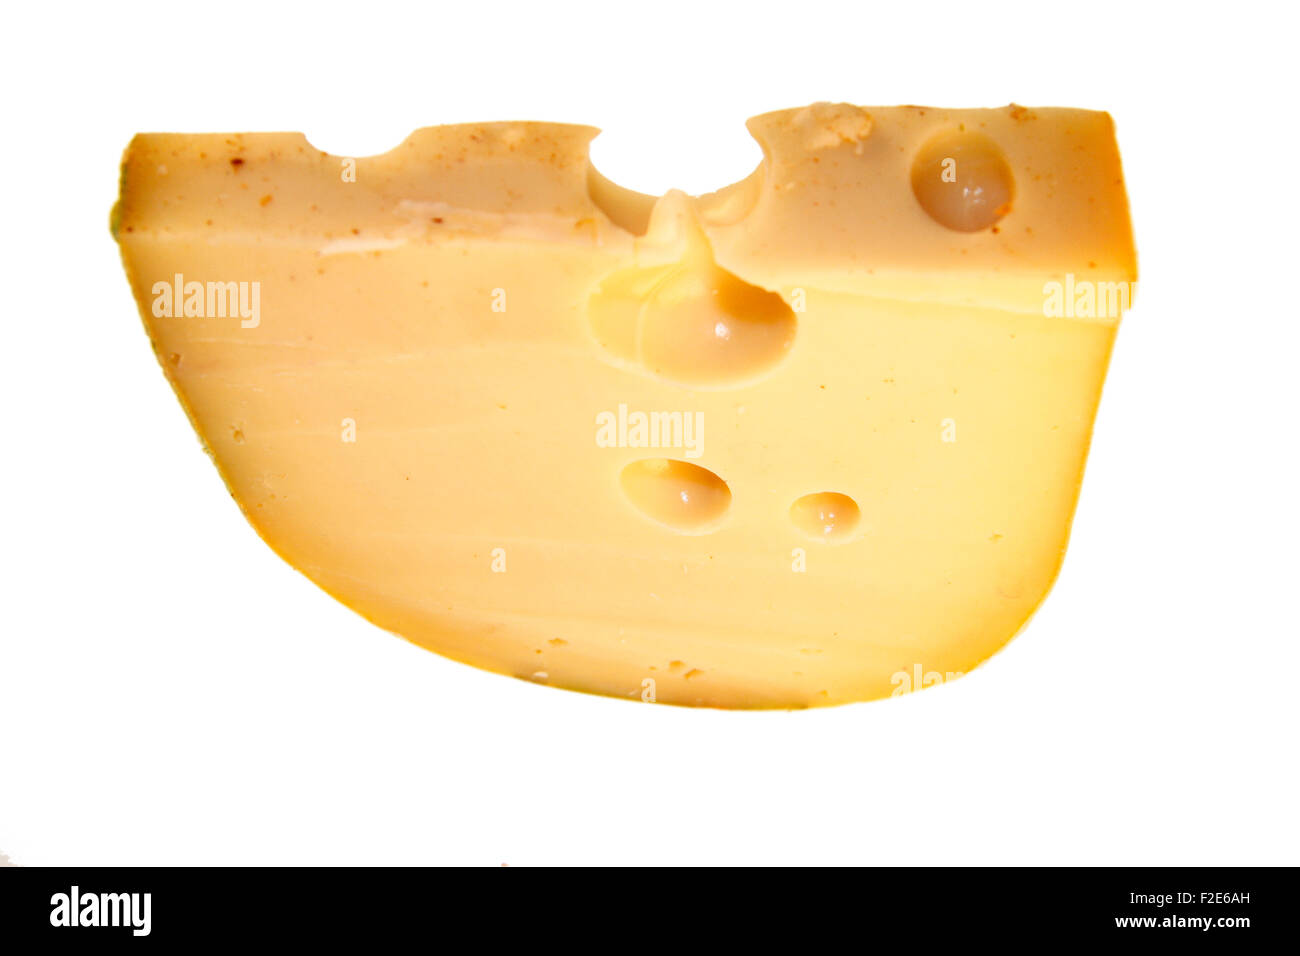 Kaese / formaggio - Symbolbild Nahrungsmittel. Foto Stock